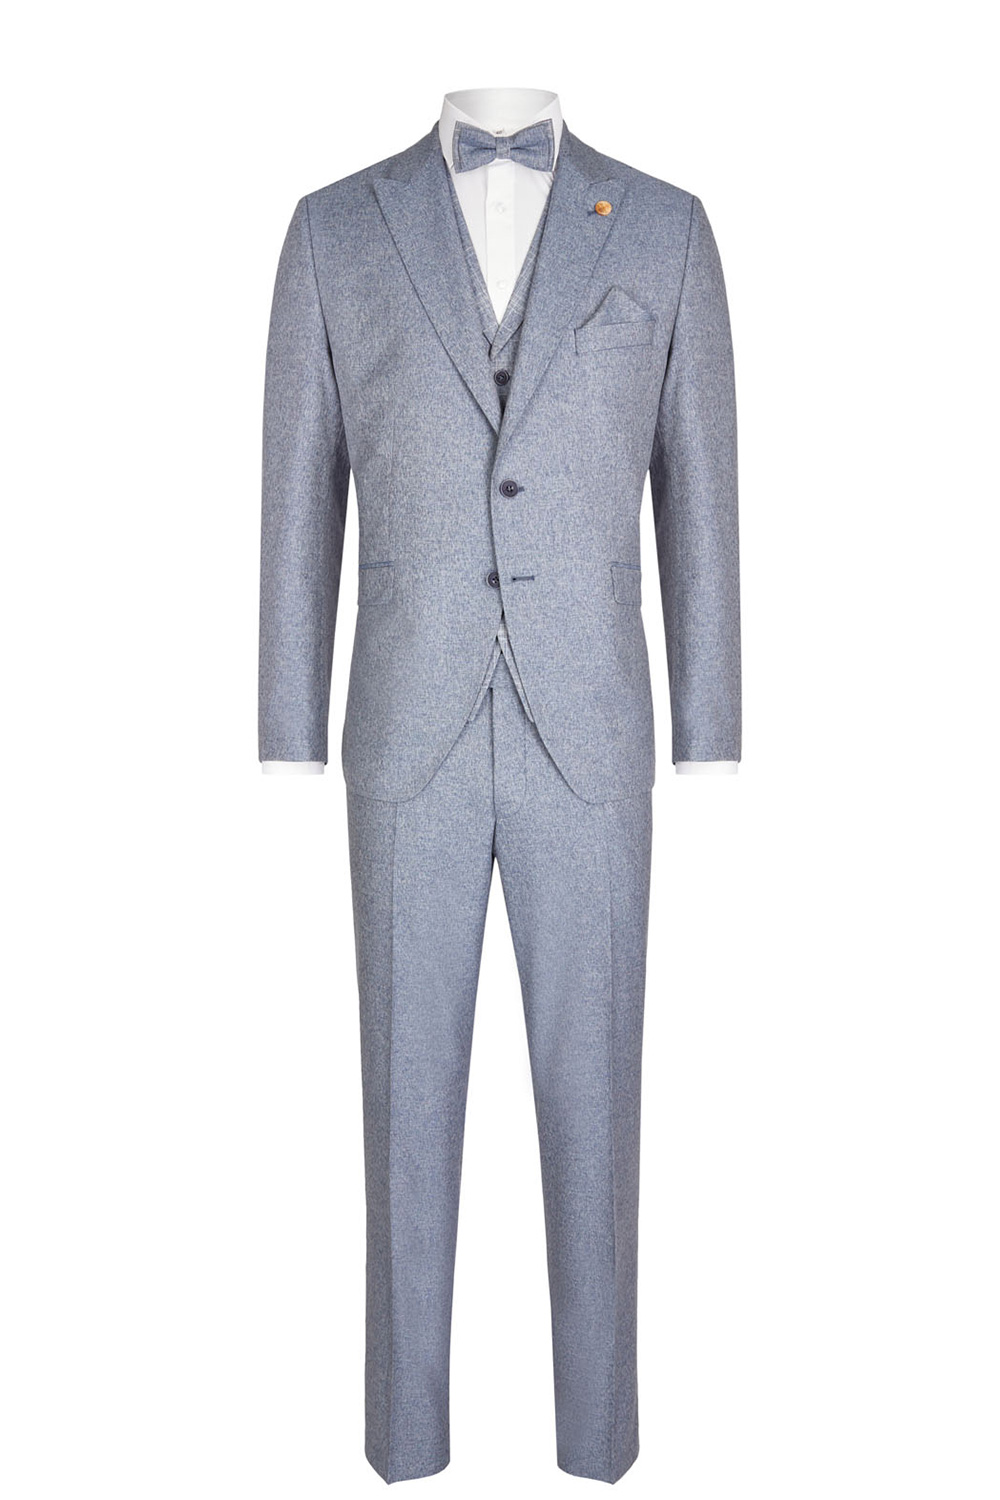 Mottled Blue 3 piece Wedding Suit - Tom Murphy's Formal and Menswear